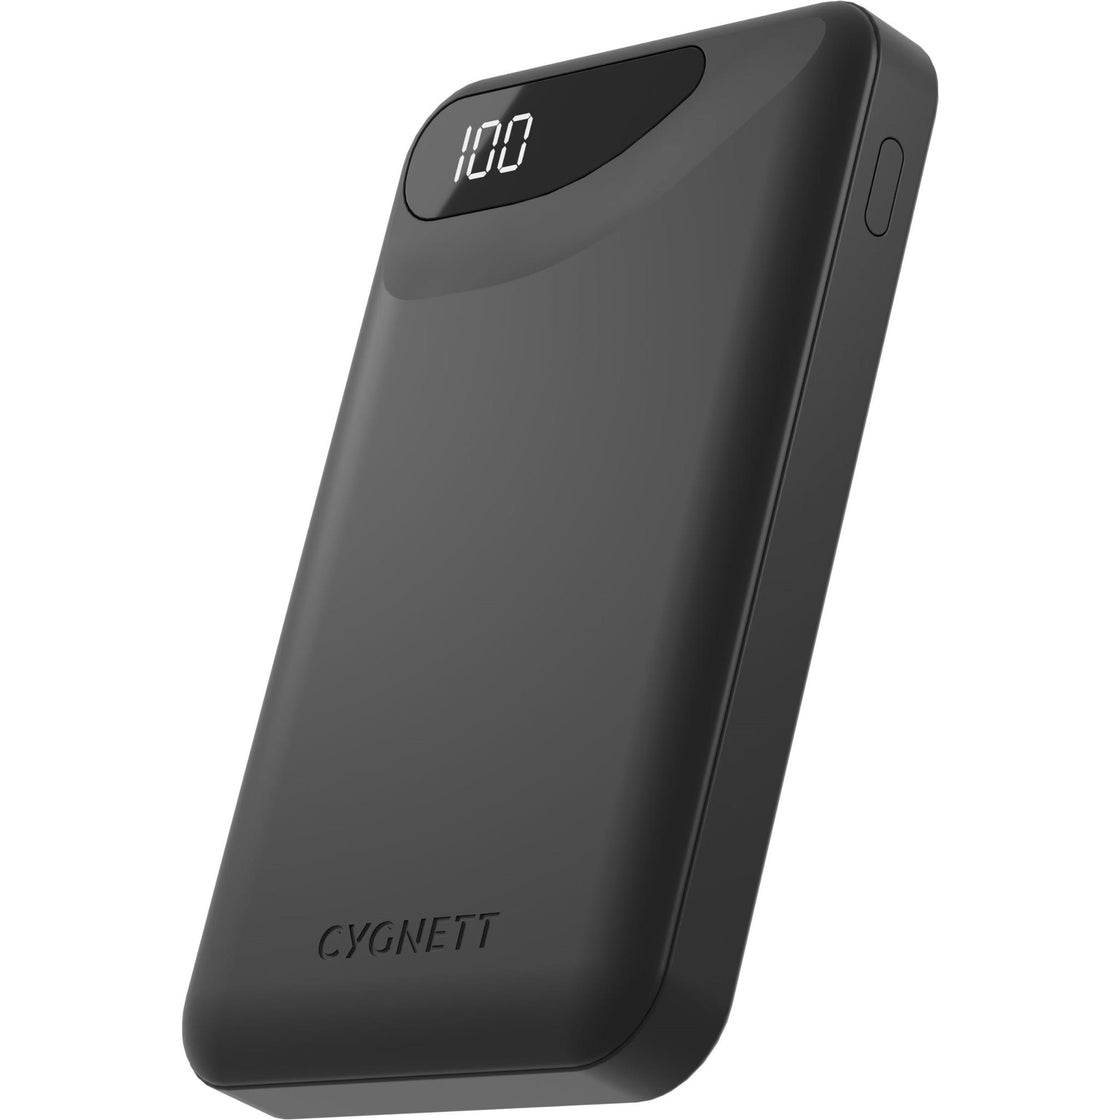 Cygnett ChargeUp Boost Gen3 10,000 mAh Power Bank - Black